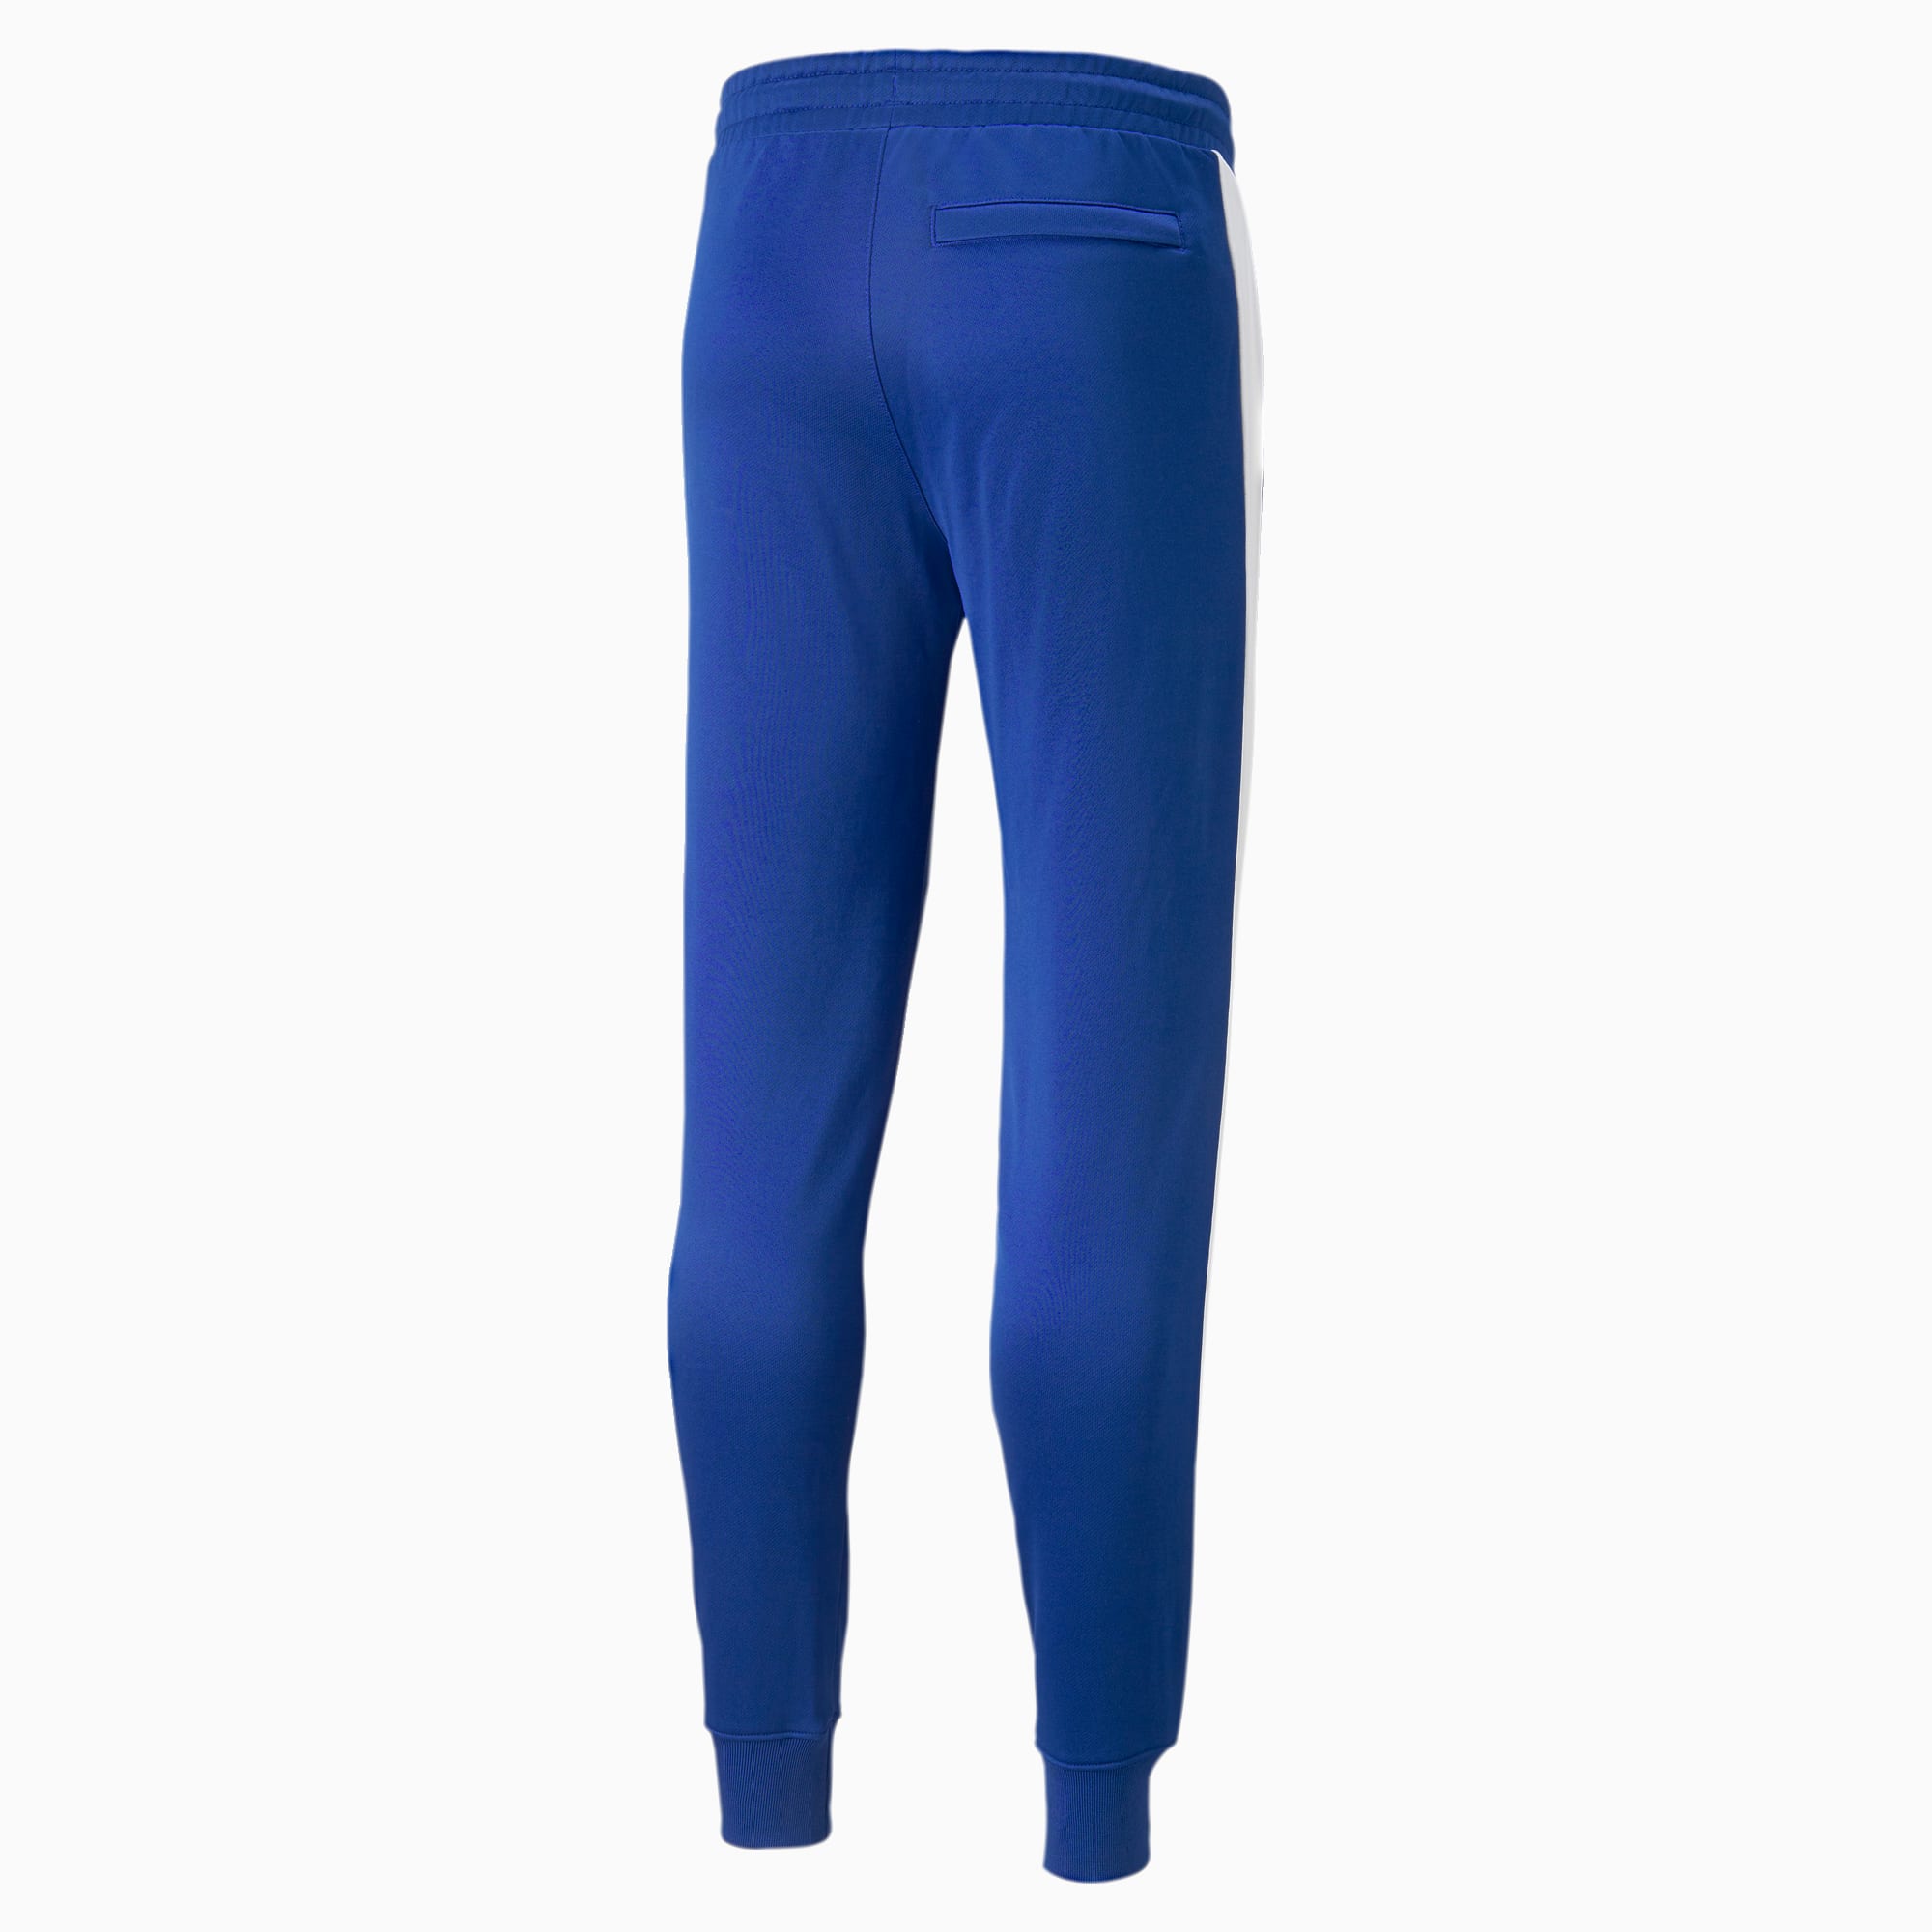 PUMA Iconic T7 Men's Track Pants, Blue, Size XXS, Clothing